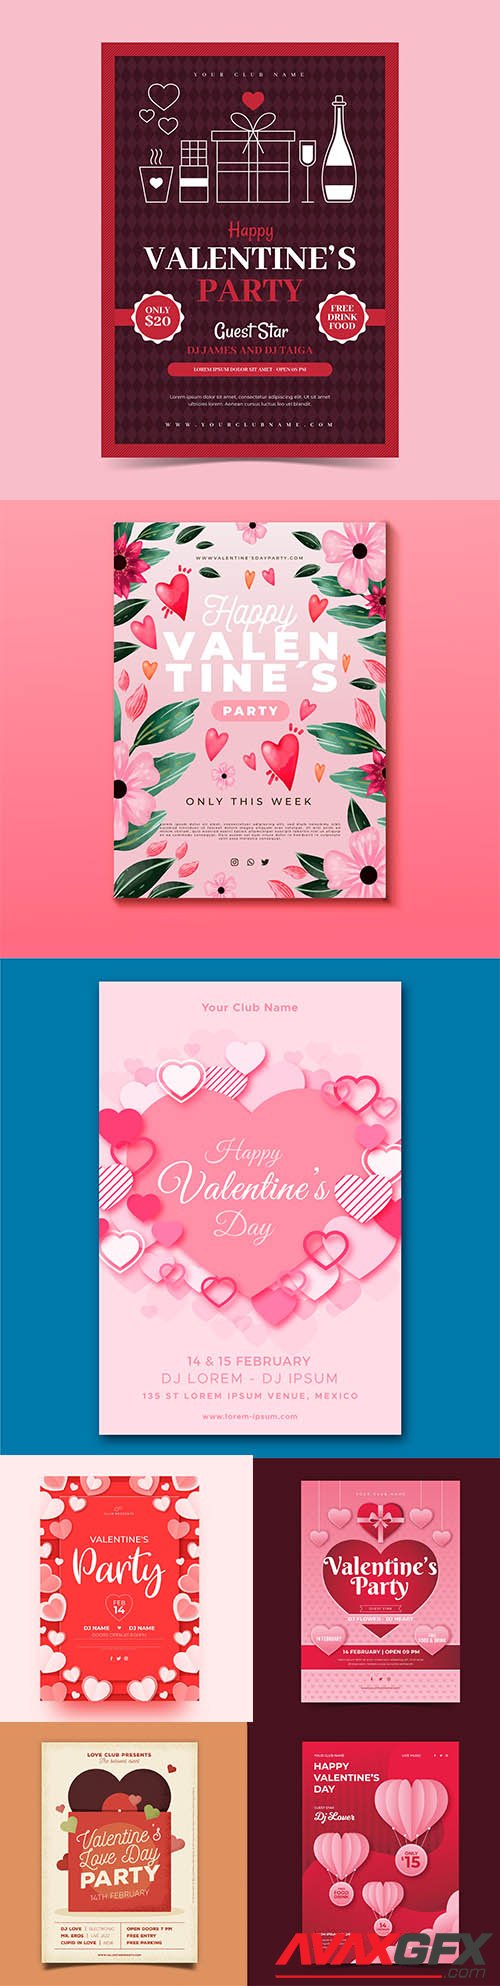 Happy Valentines day vector collection vol 6